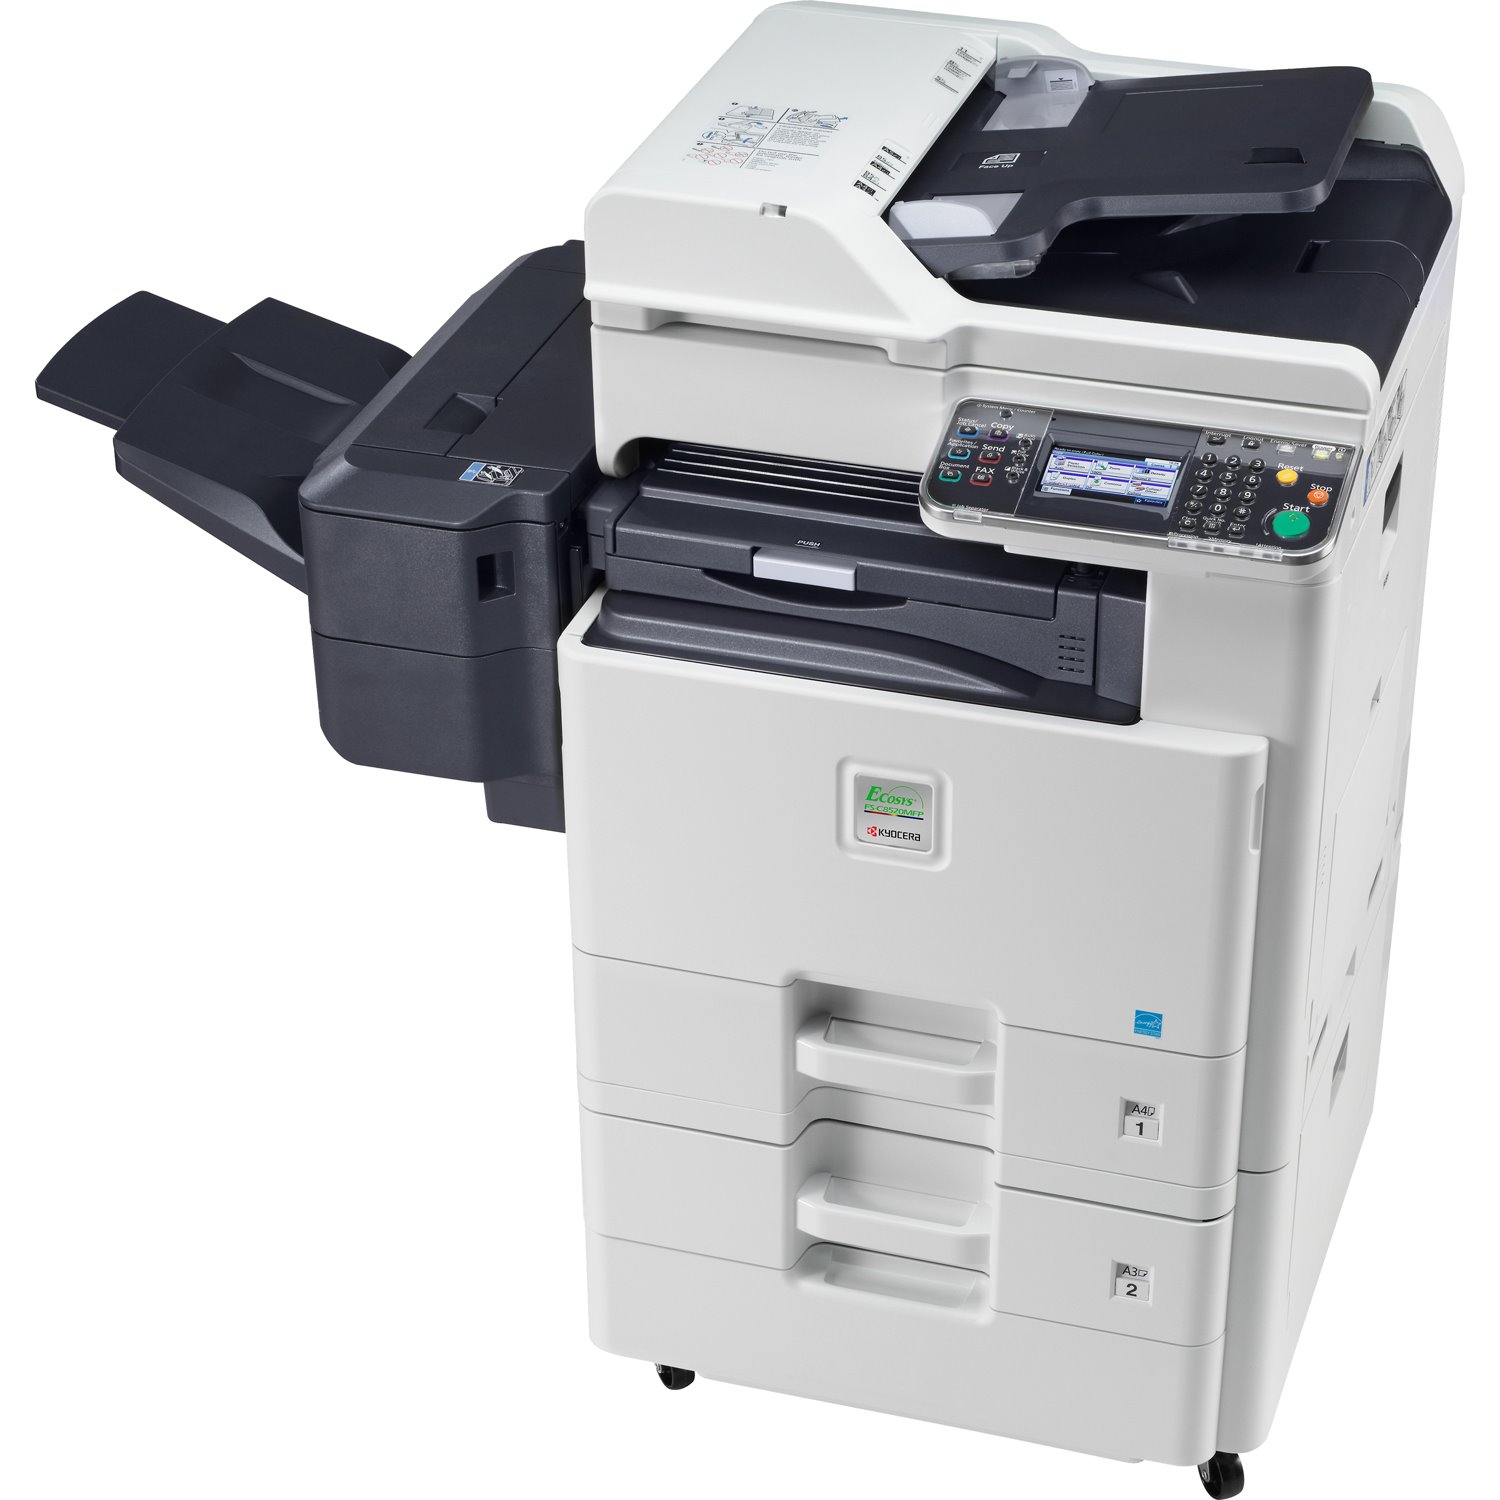 Kyocera Ecosys FS-C8520MFP Laser Multifunction Printer - Colour